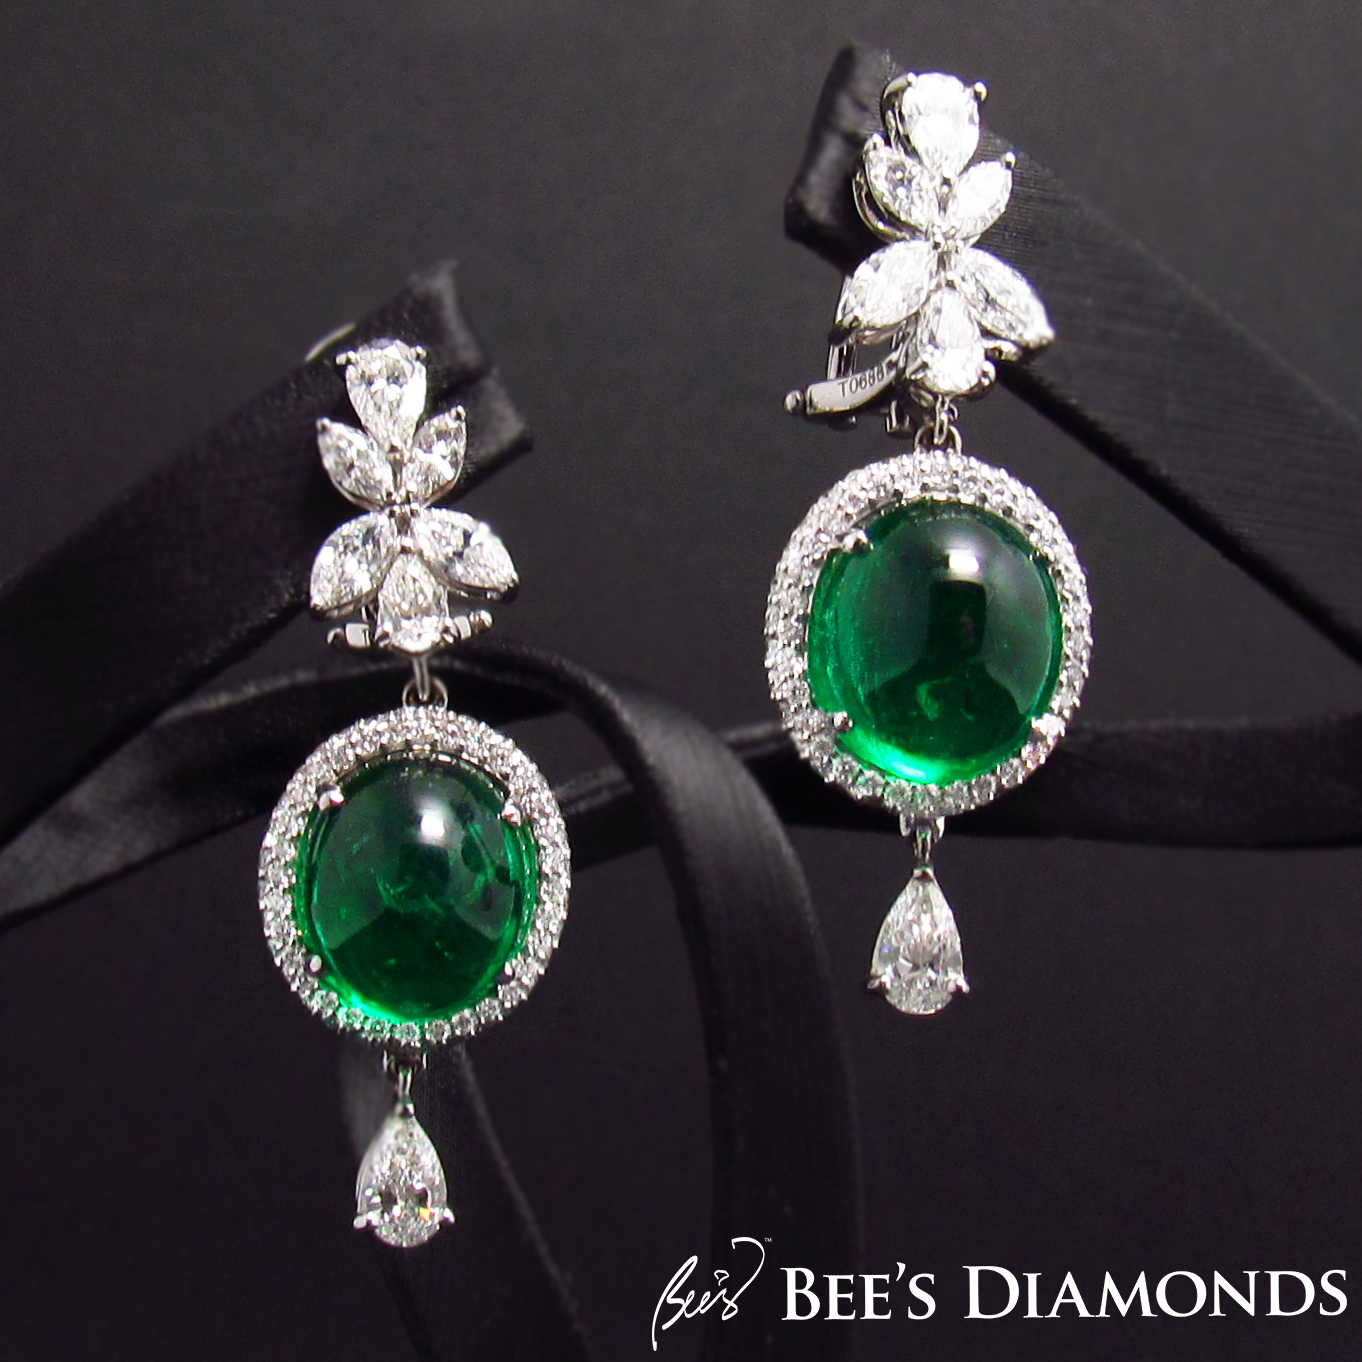 Columbian emerald cabochon earrings, bridal earrings | Bee's Diamonds